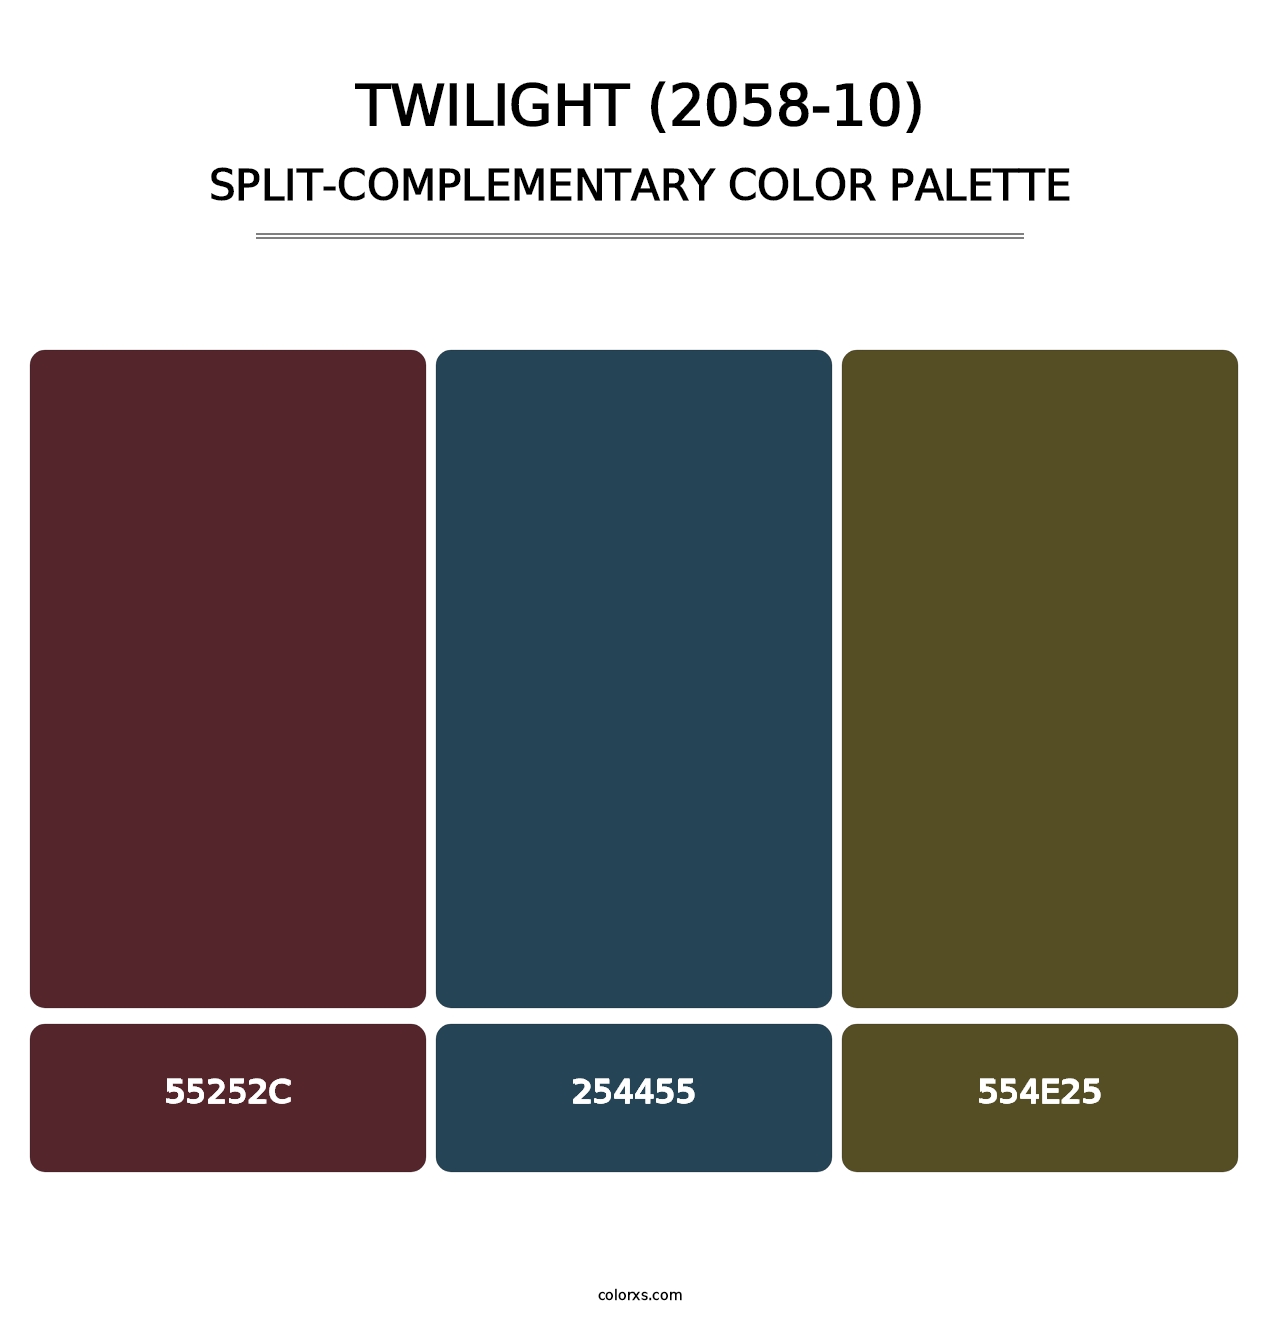 Twilight (2058-10) - Split-Complementary Color Palette